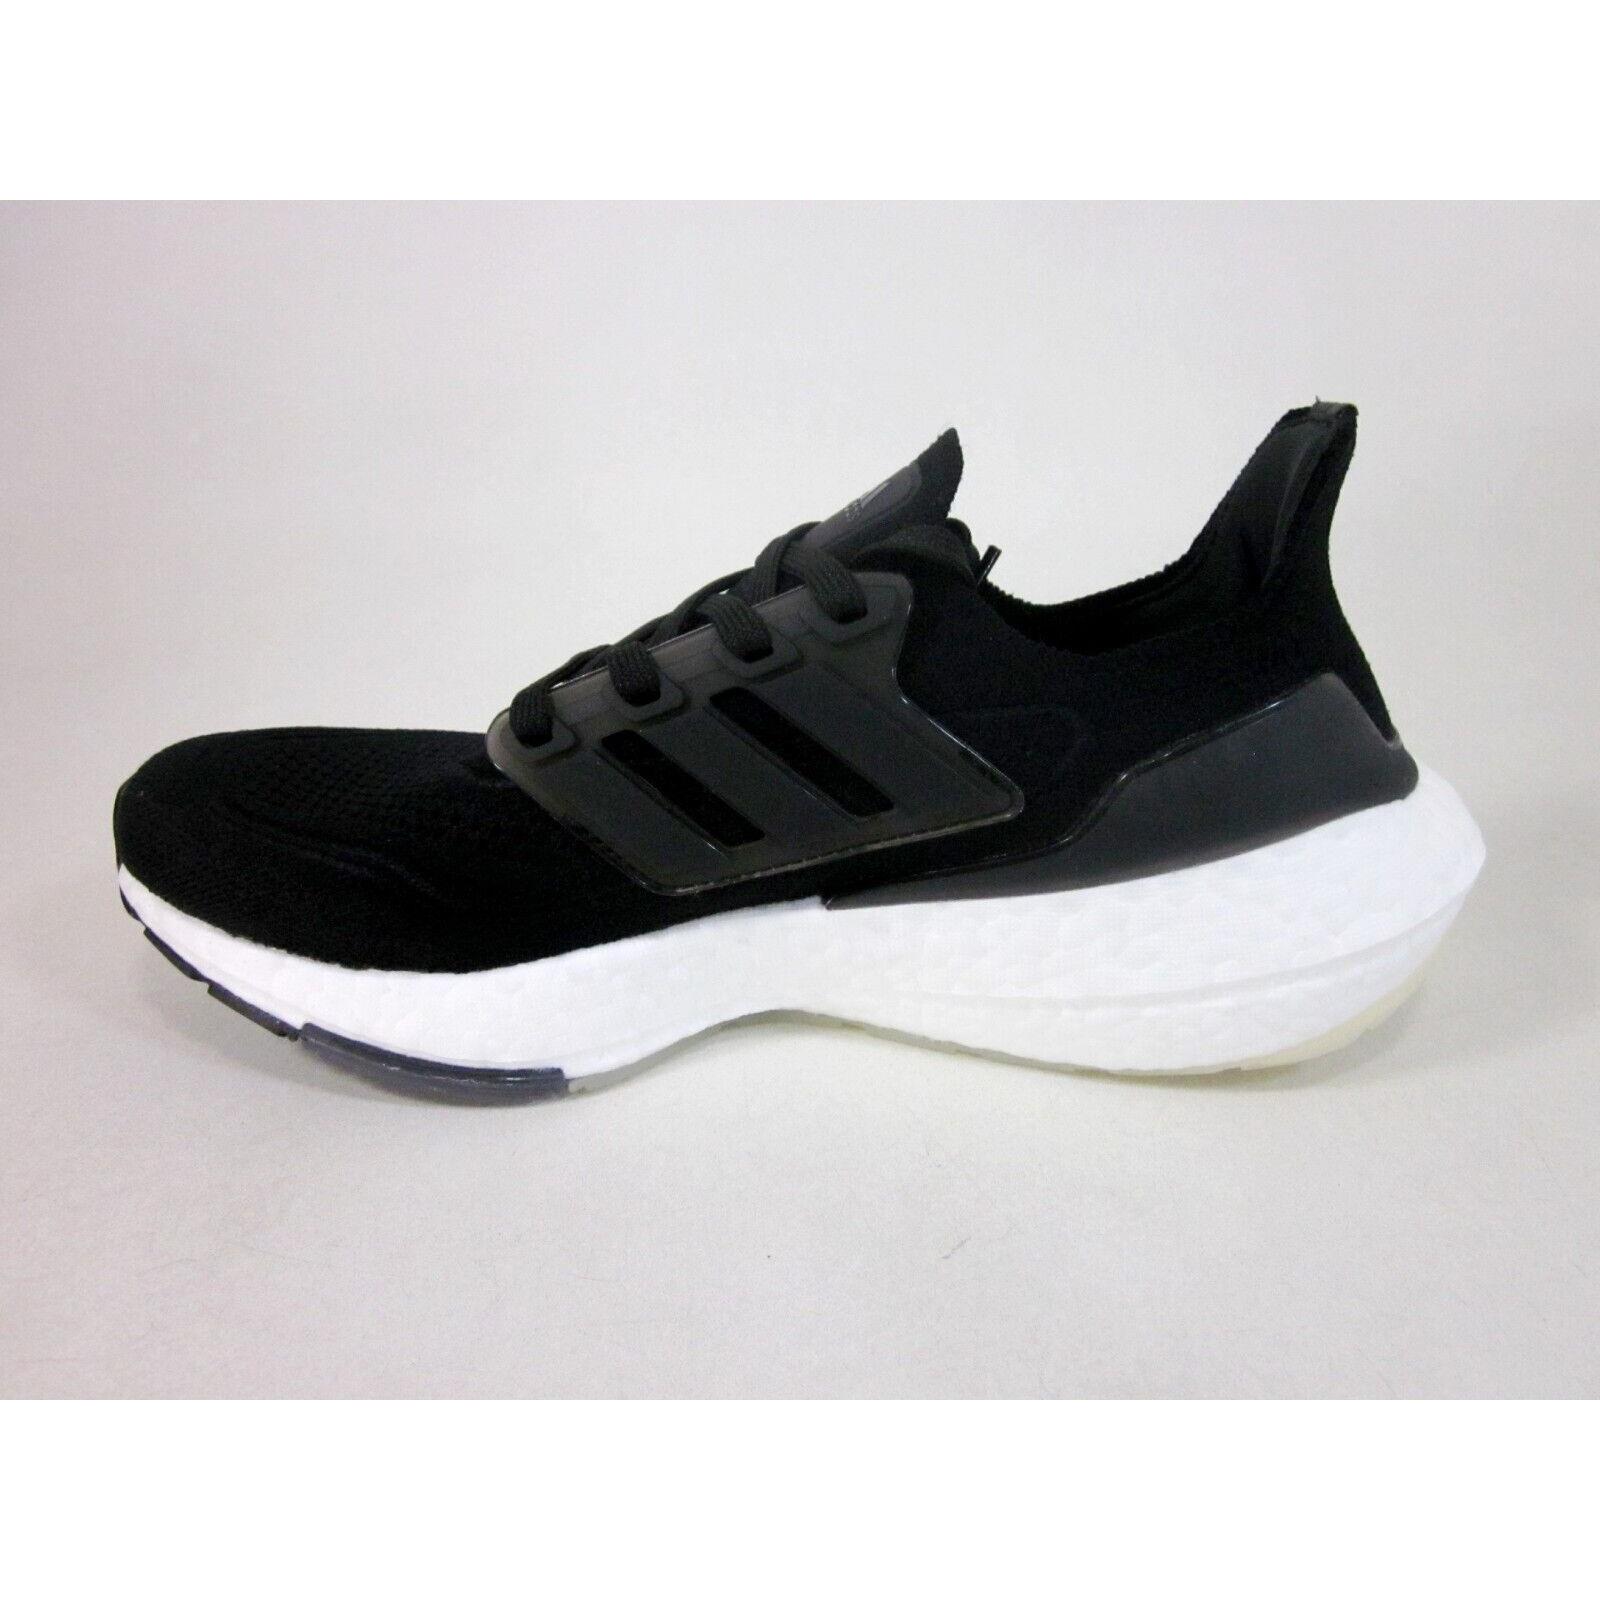 Adidas shoes Ultraboost - Black/Grey/White 1